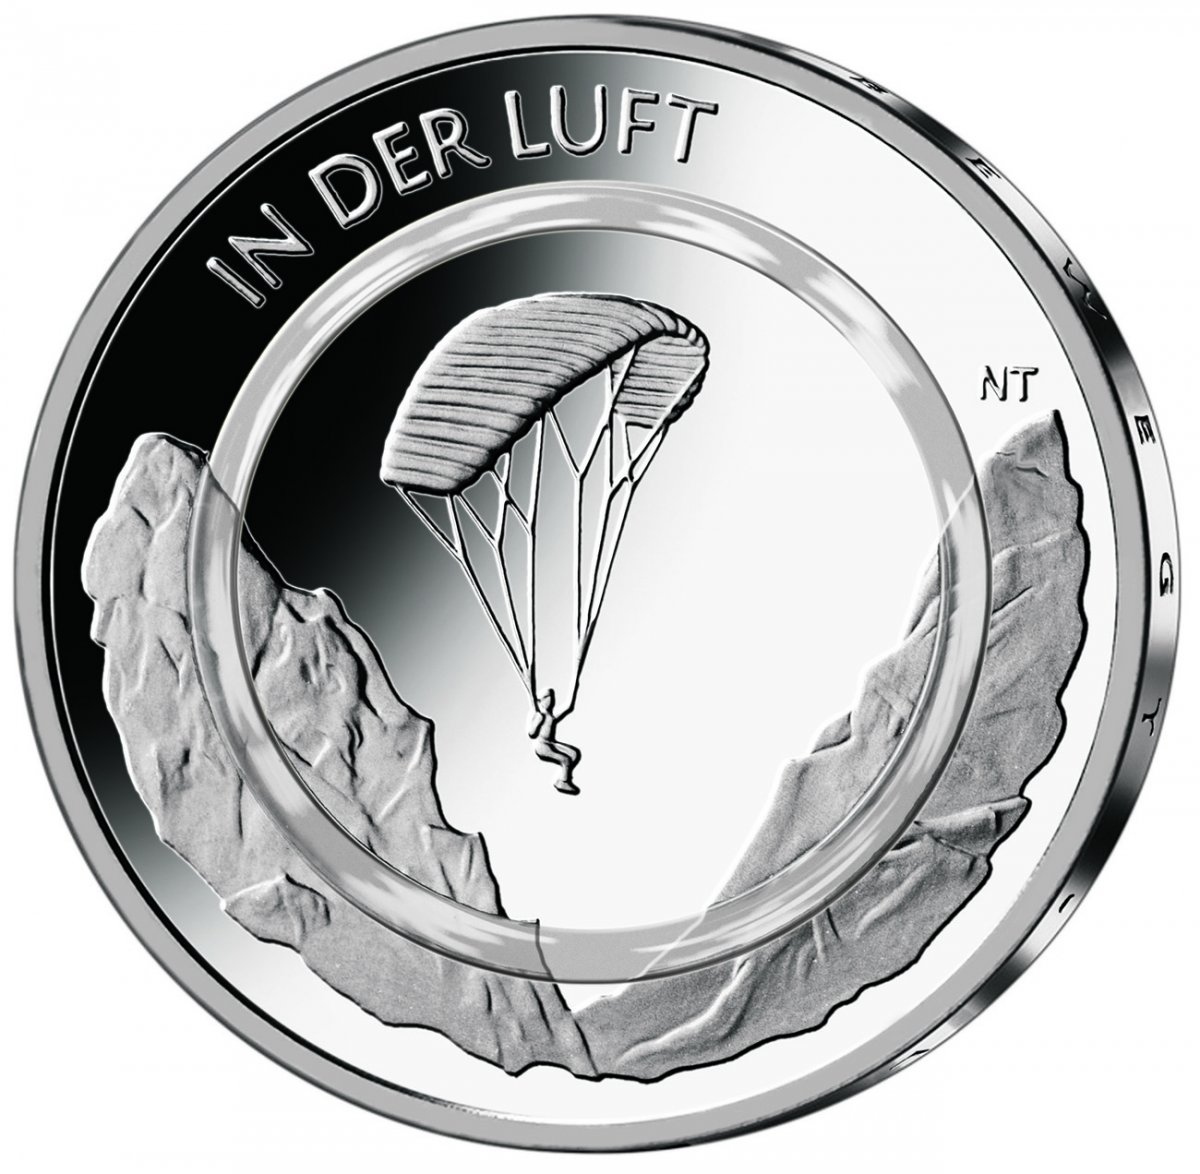 10 euro polymer ring collector coin 2019 "In der Luft" 